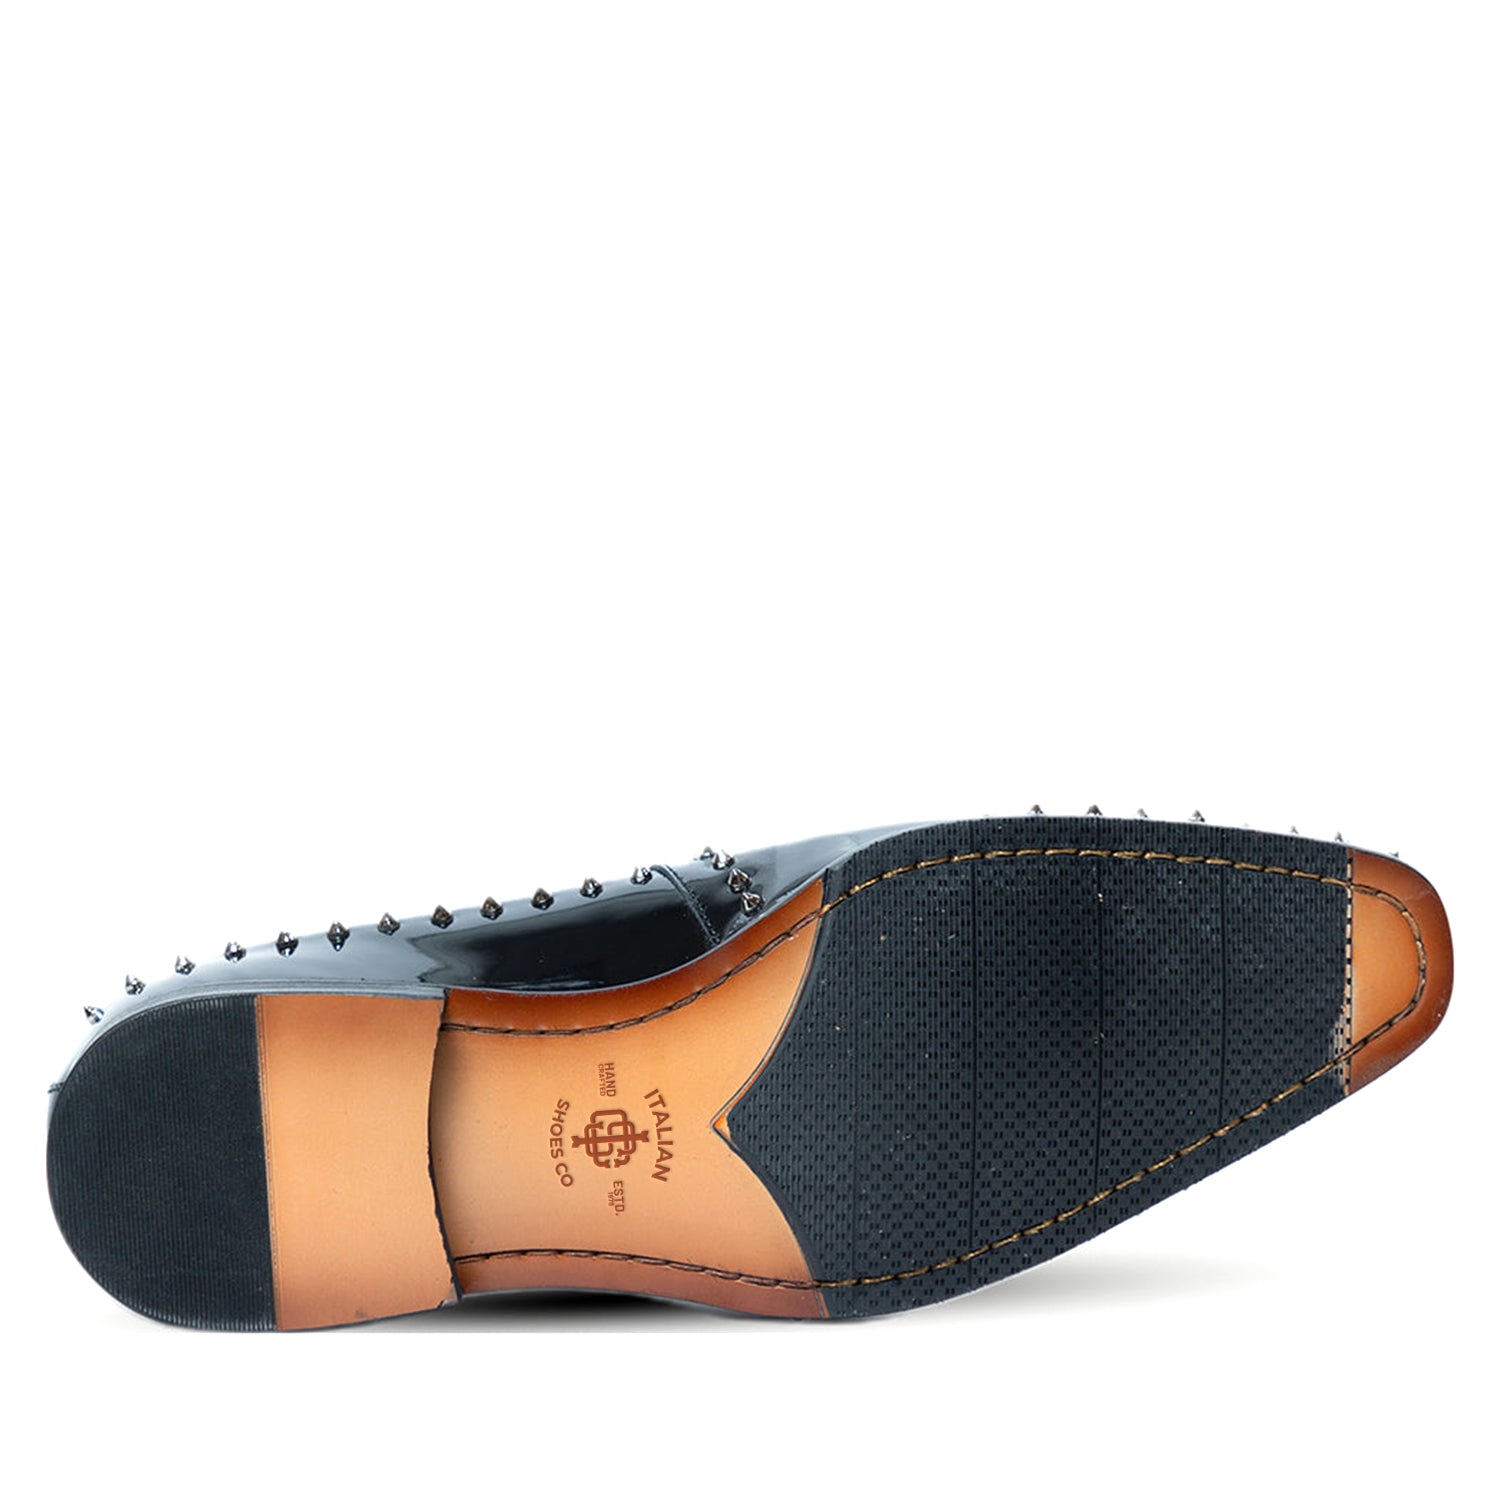 Black Patent  Studded Slip On Loafers